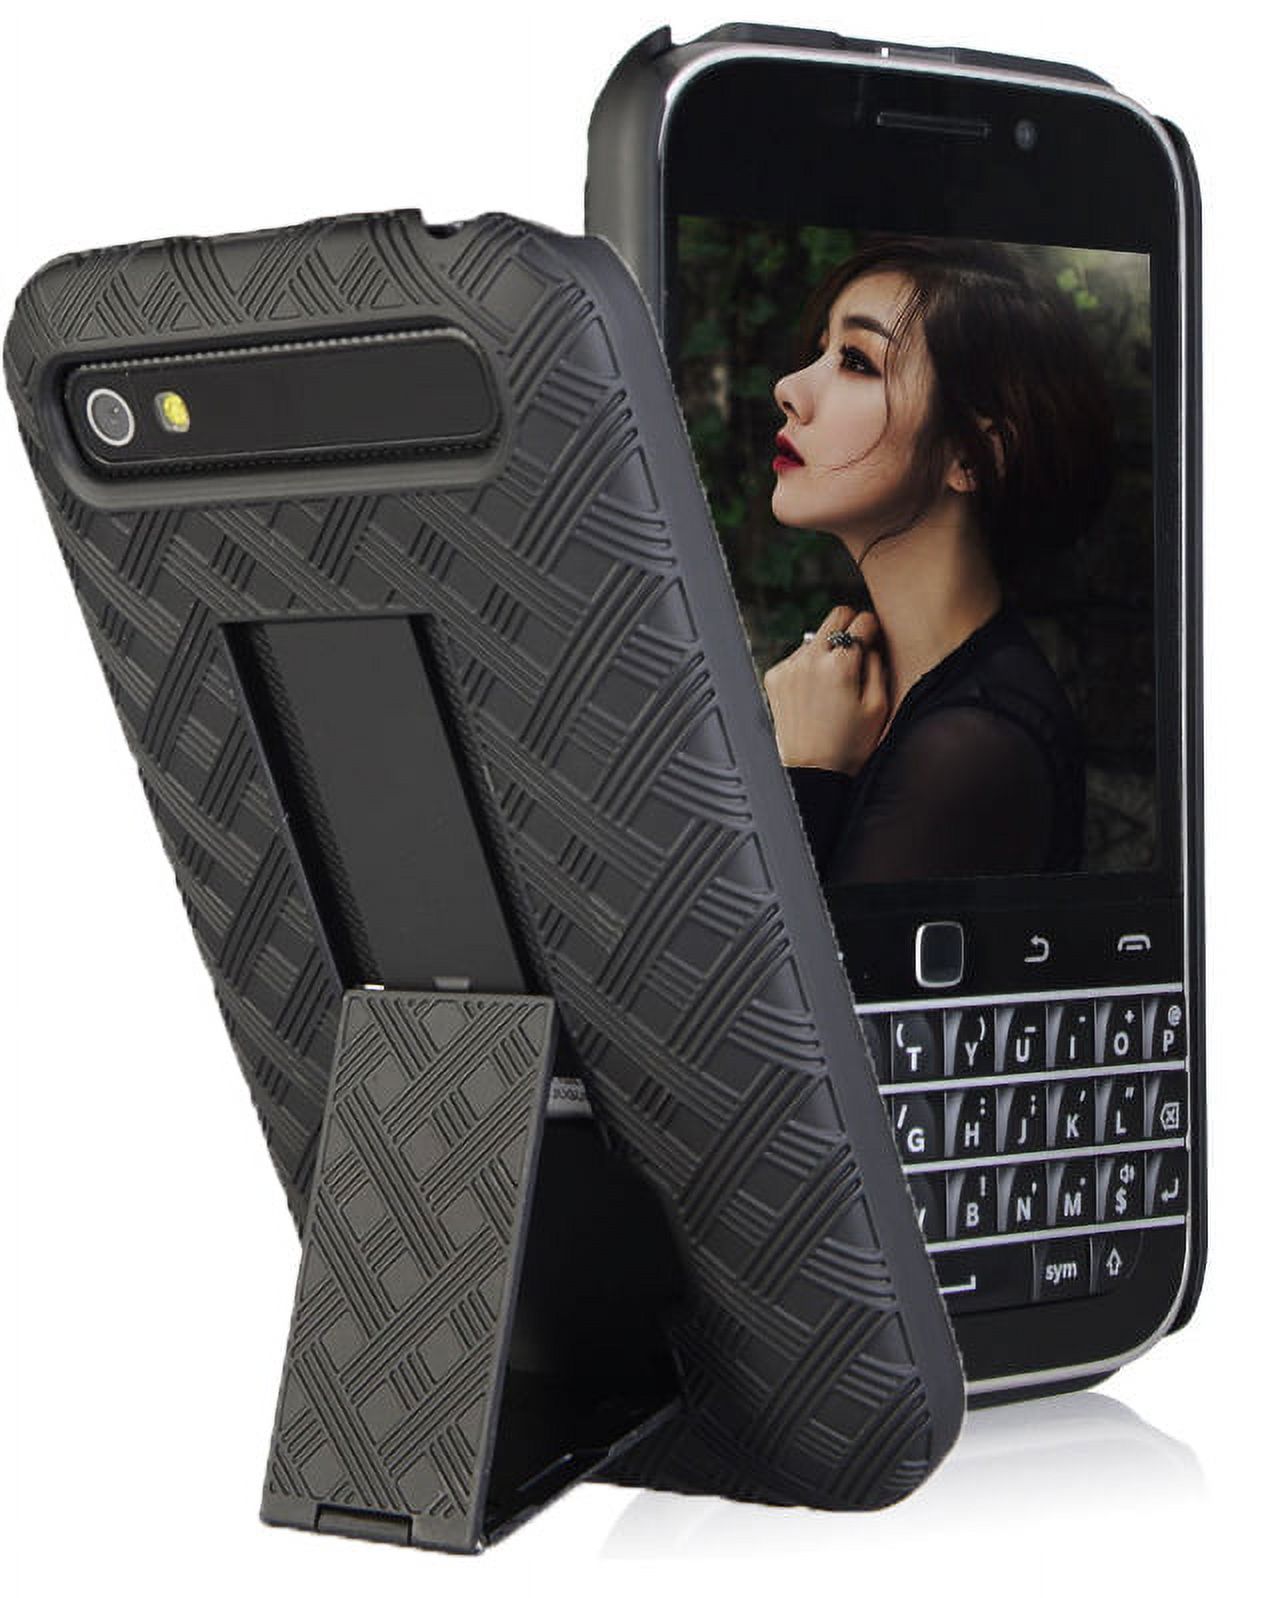 Case for BlackBerry Classic, Nakedcellphone Black Kickstand Slim Hard Shell Cover for BlackBerry Classic, Q20 - image 1 of 5